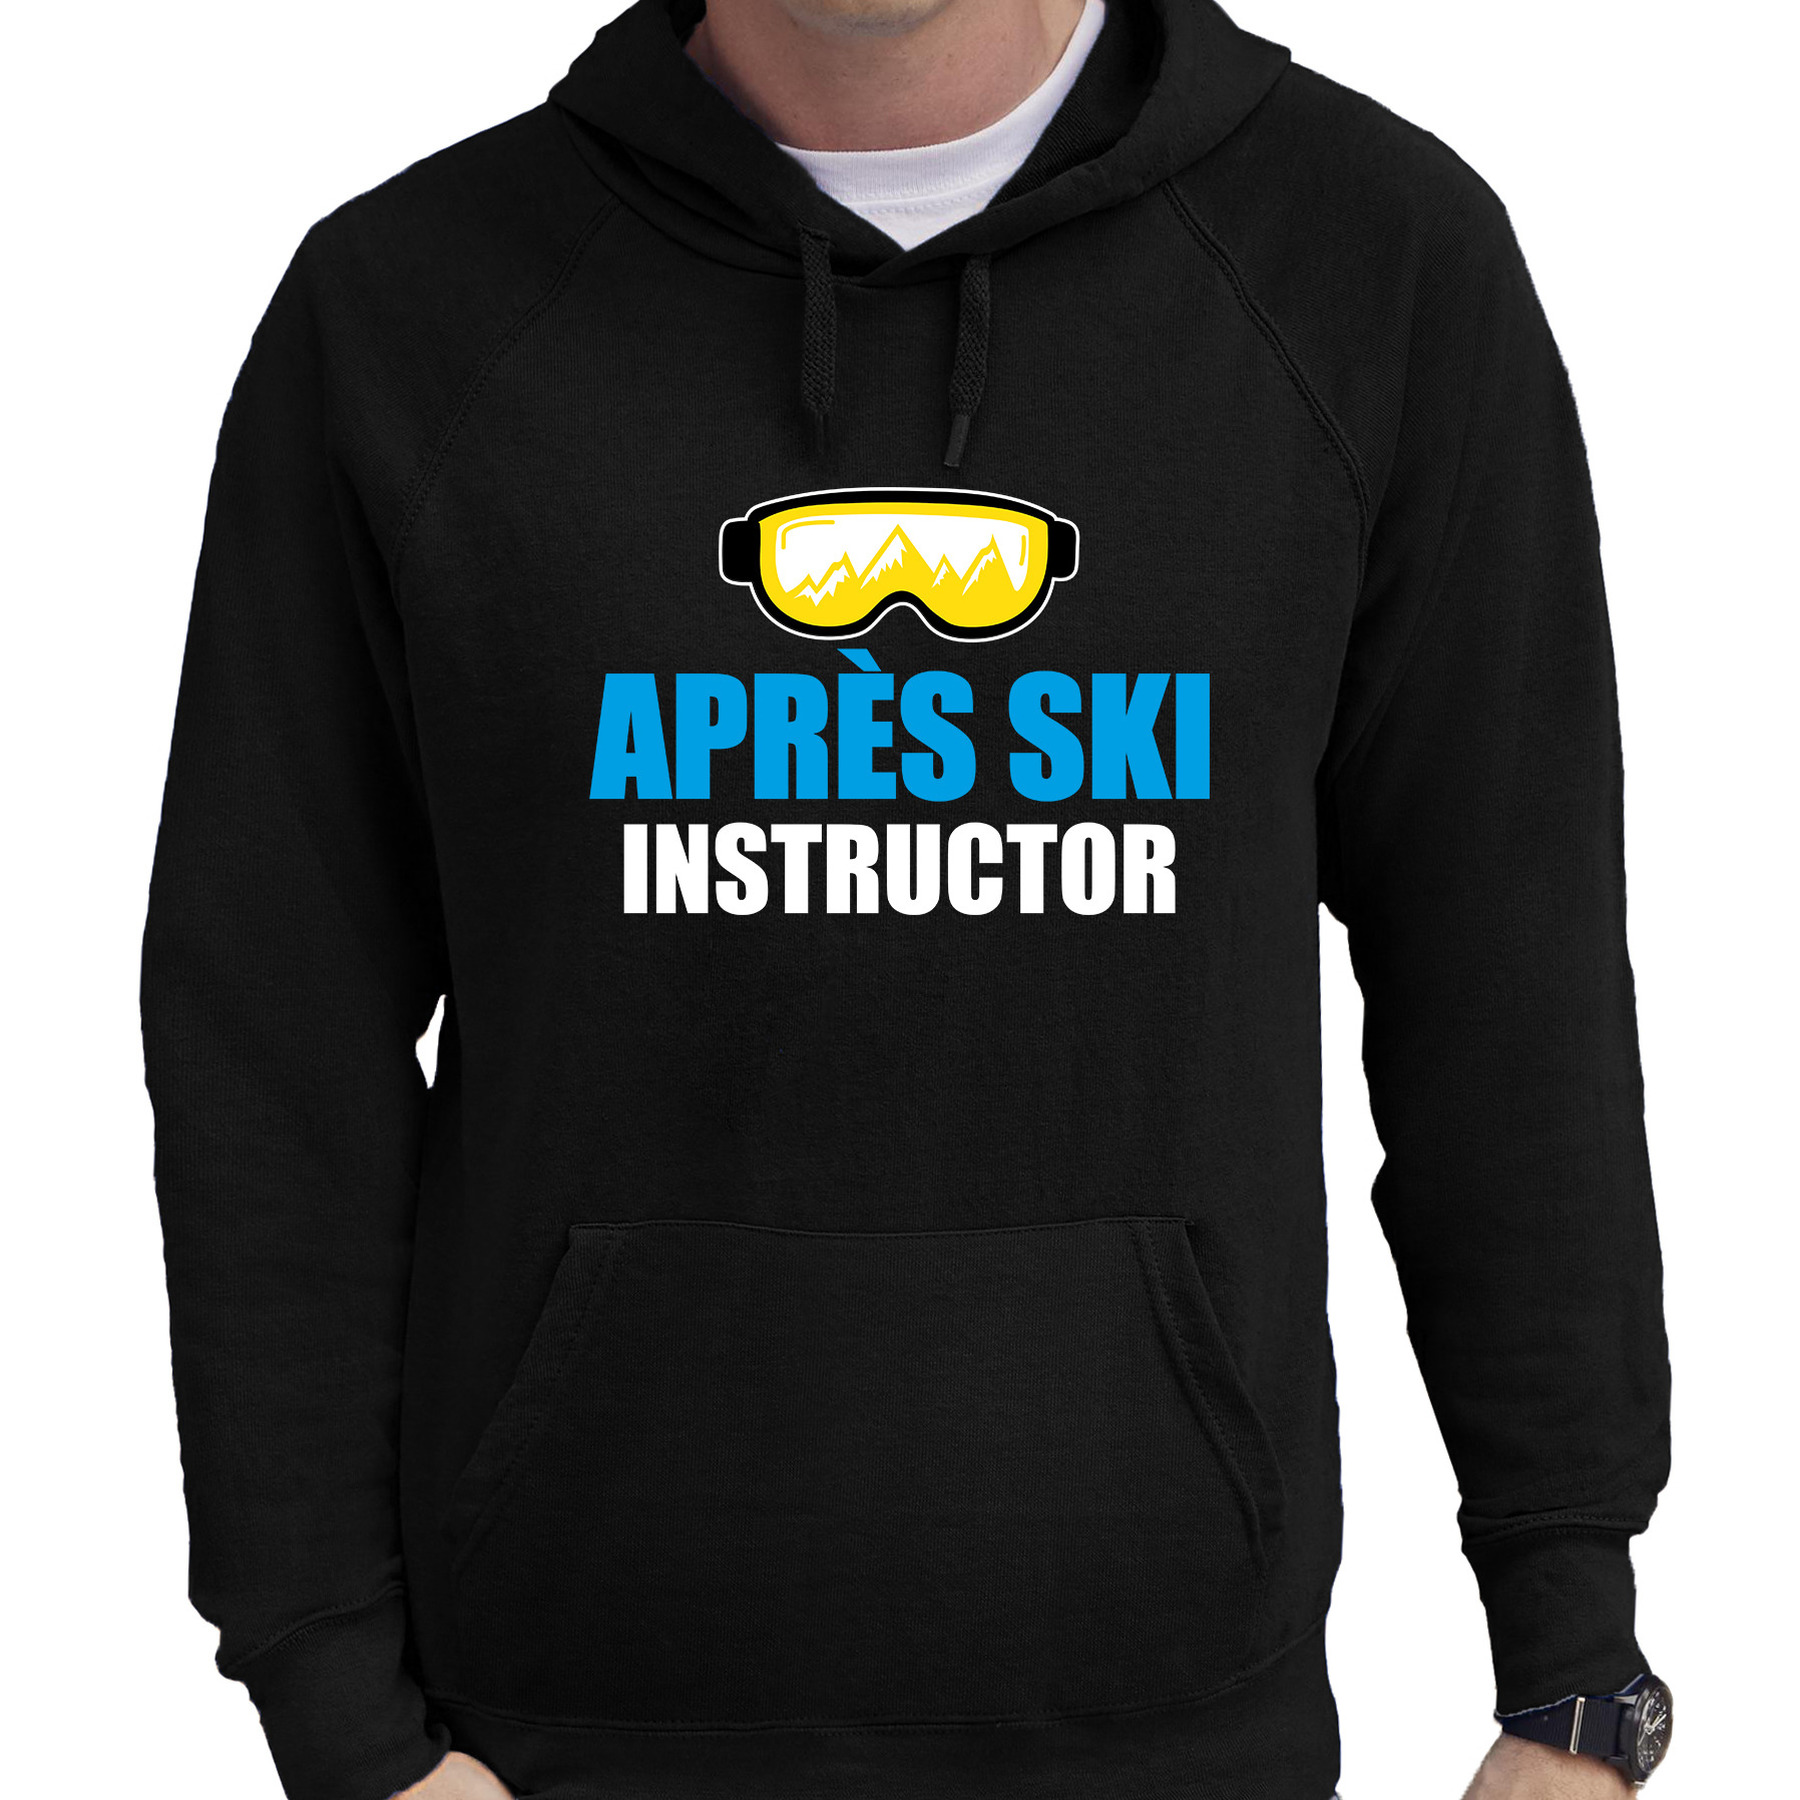 Foute Apres ski capuchon sweater Apres ski instructor zwart heren